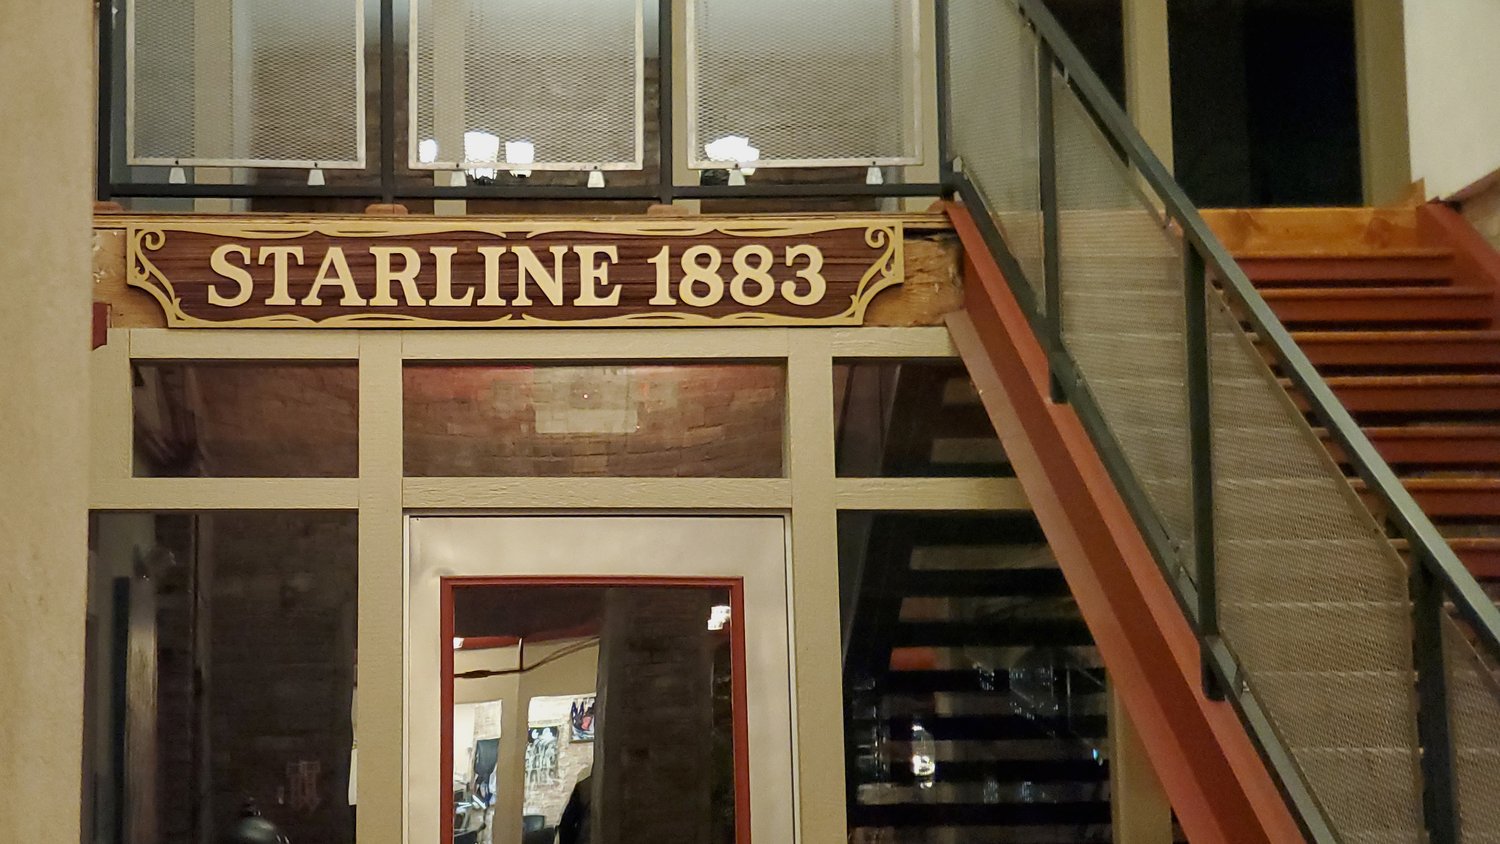 Starline 1883 sign.